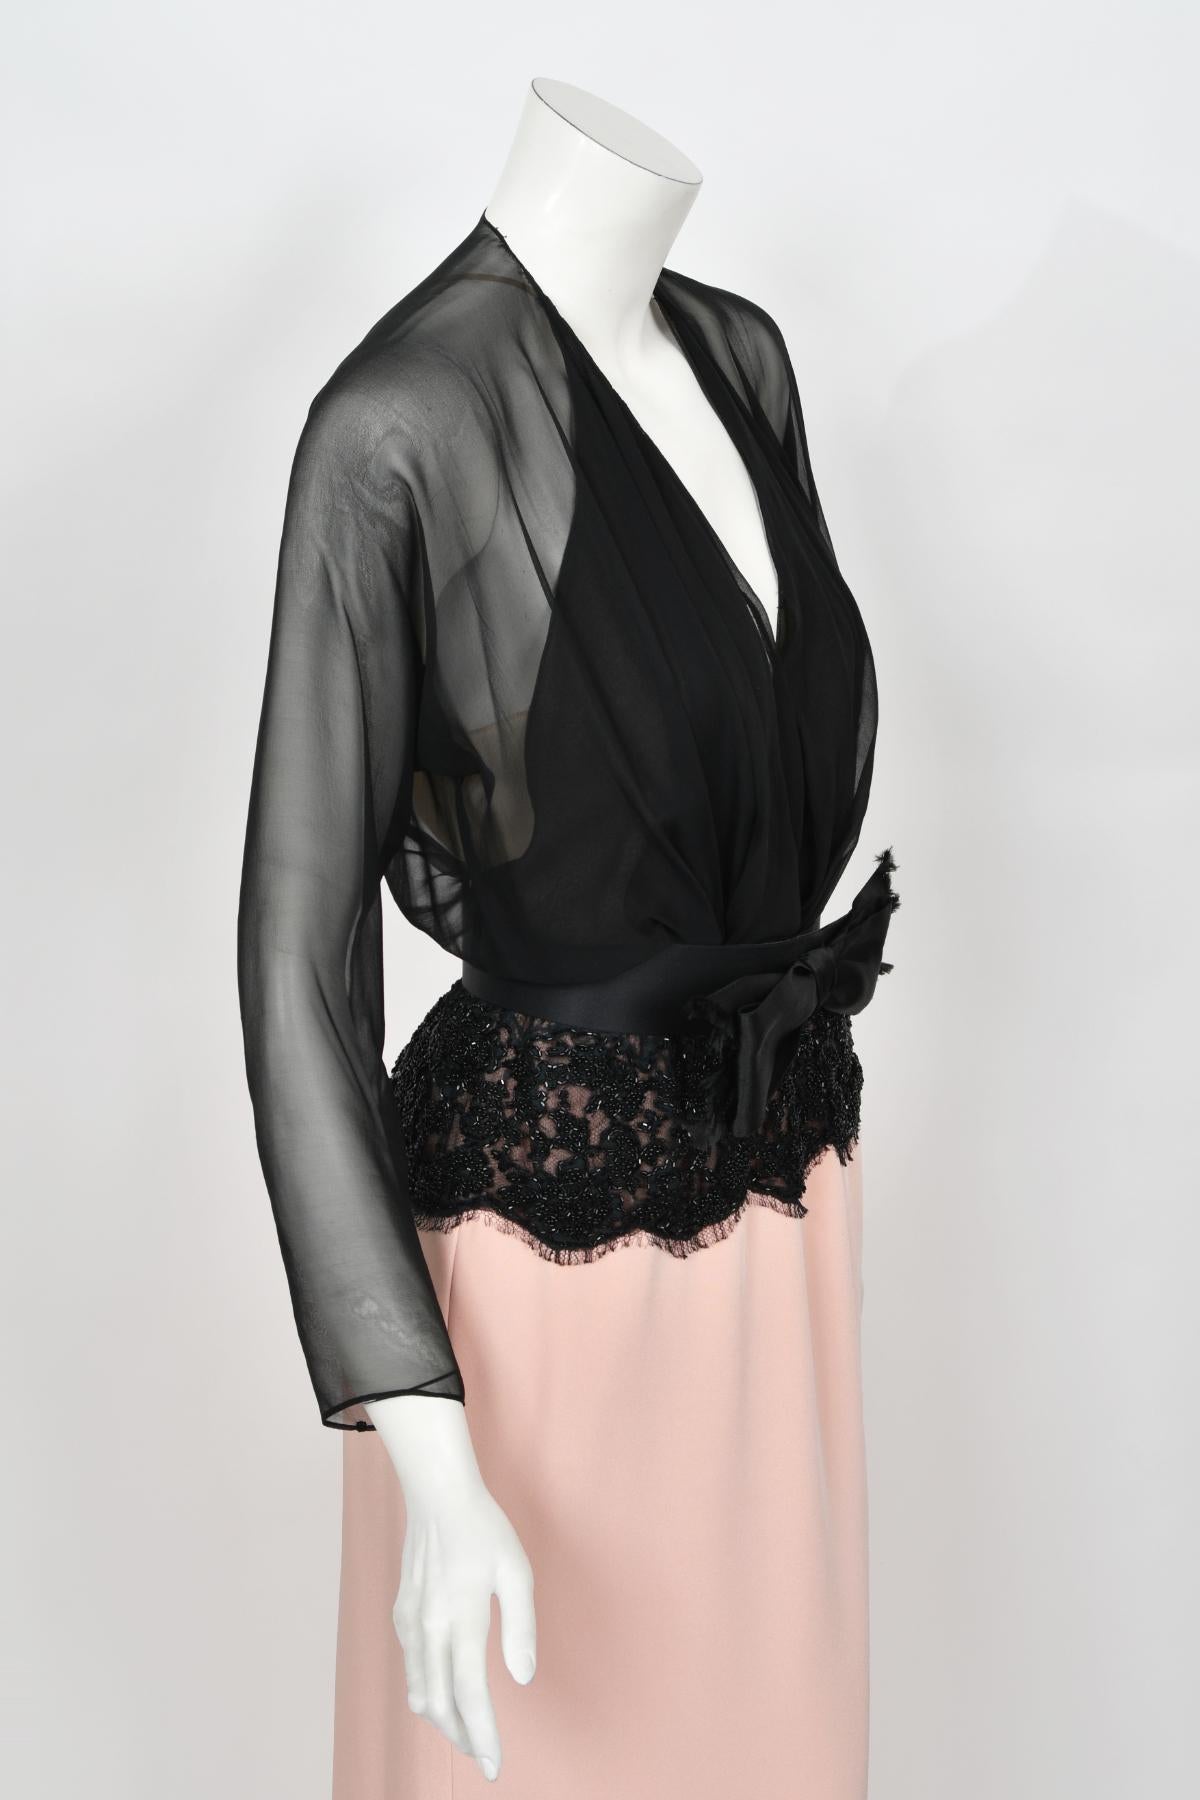 1986 Oscar de la Renta Documented Runway Black Sheer Chiffon & Pink Silk Gown For Sale 6